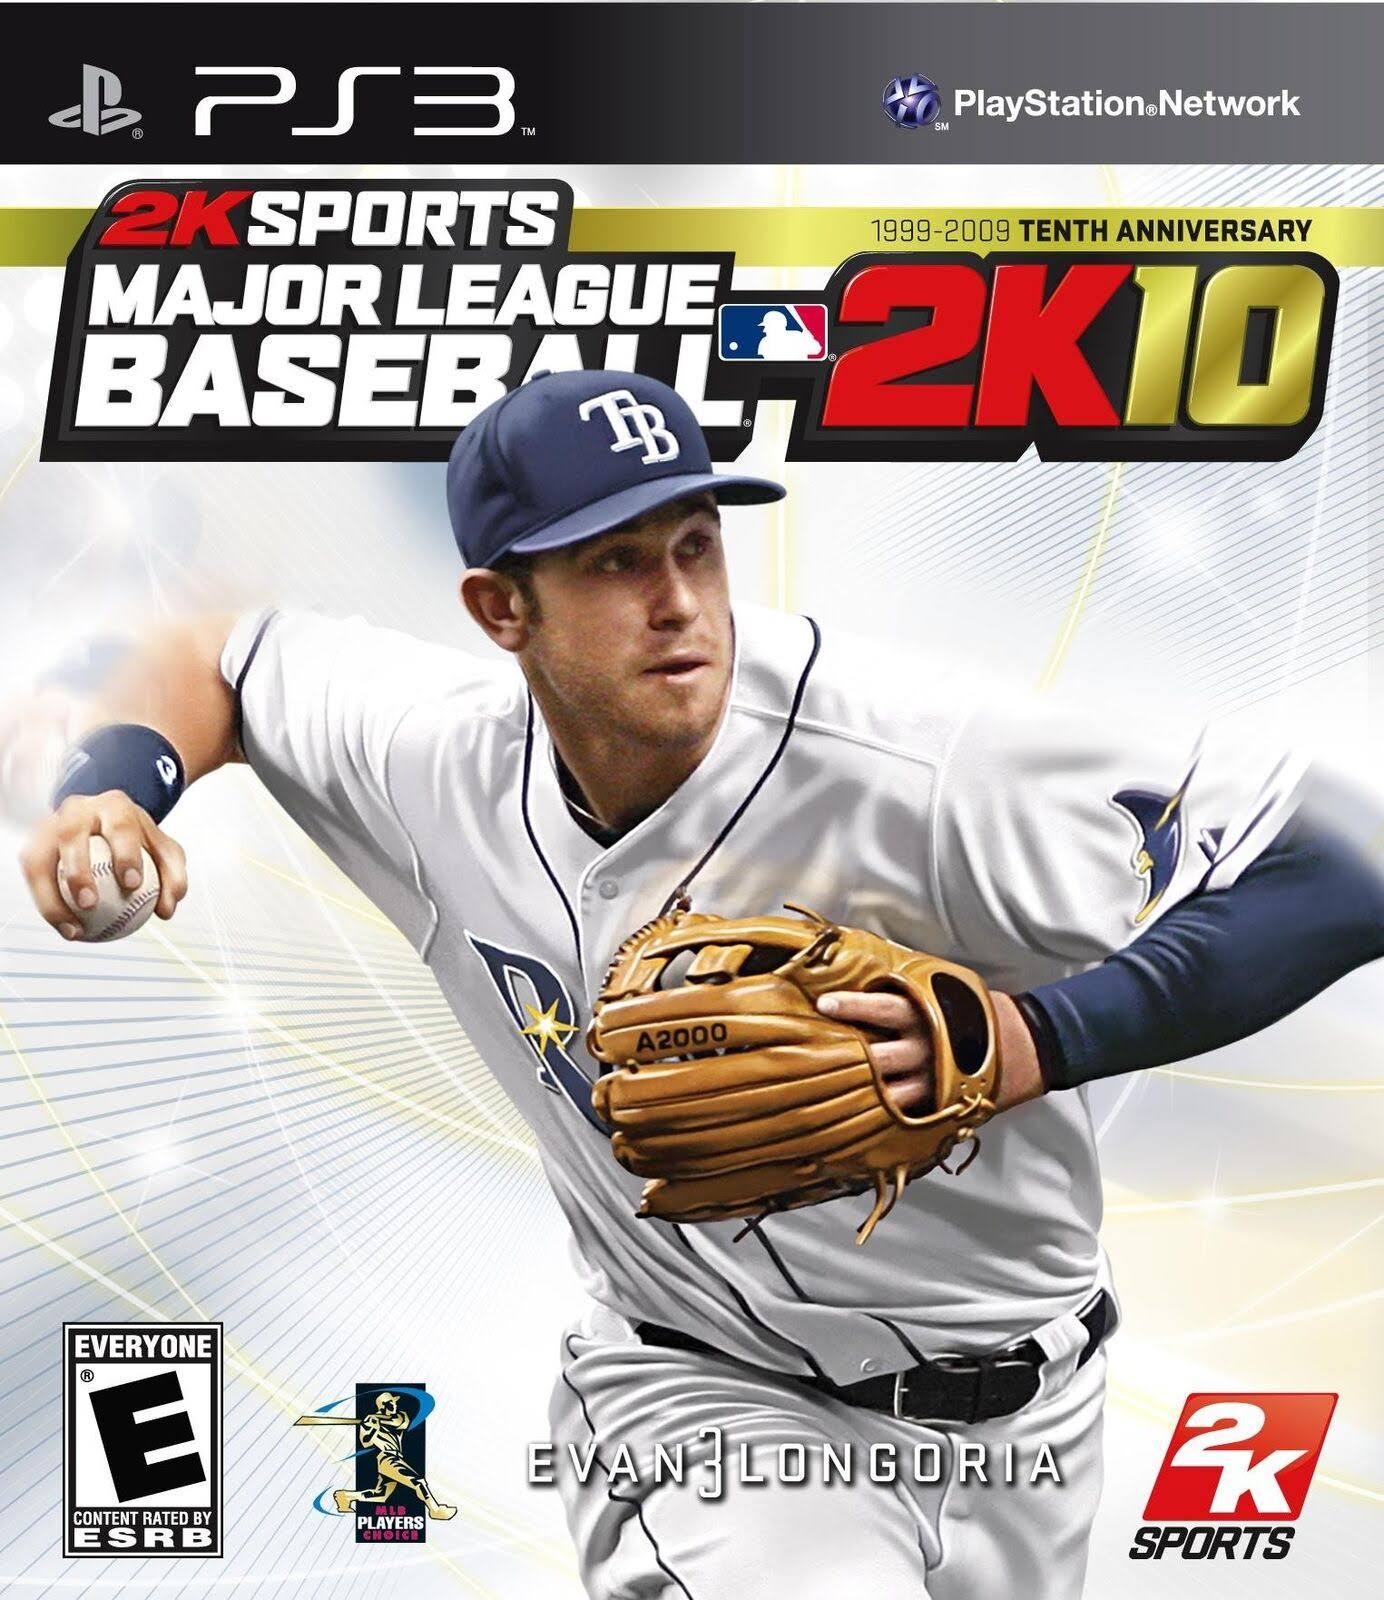 Major League Baseball 2k10 - PlayStation 3